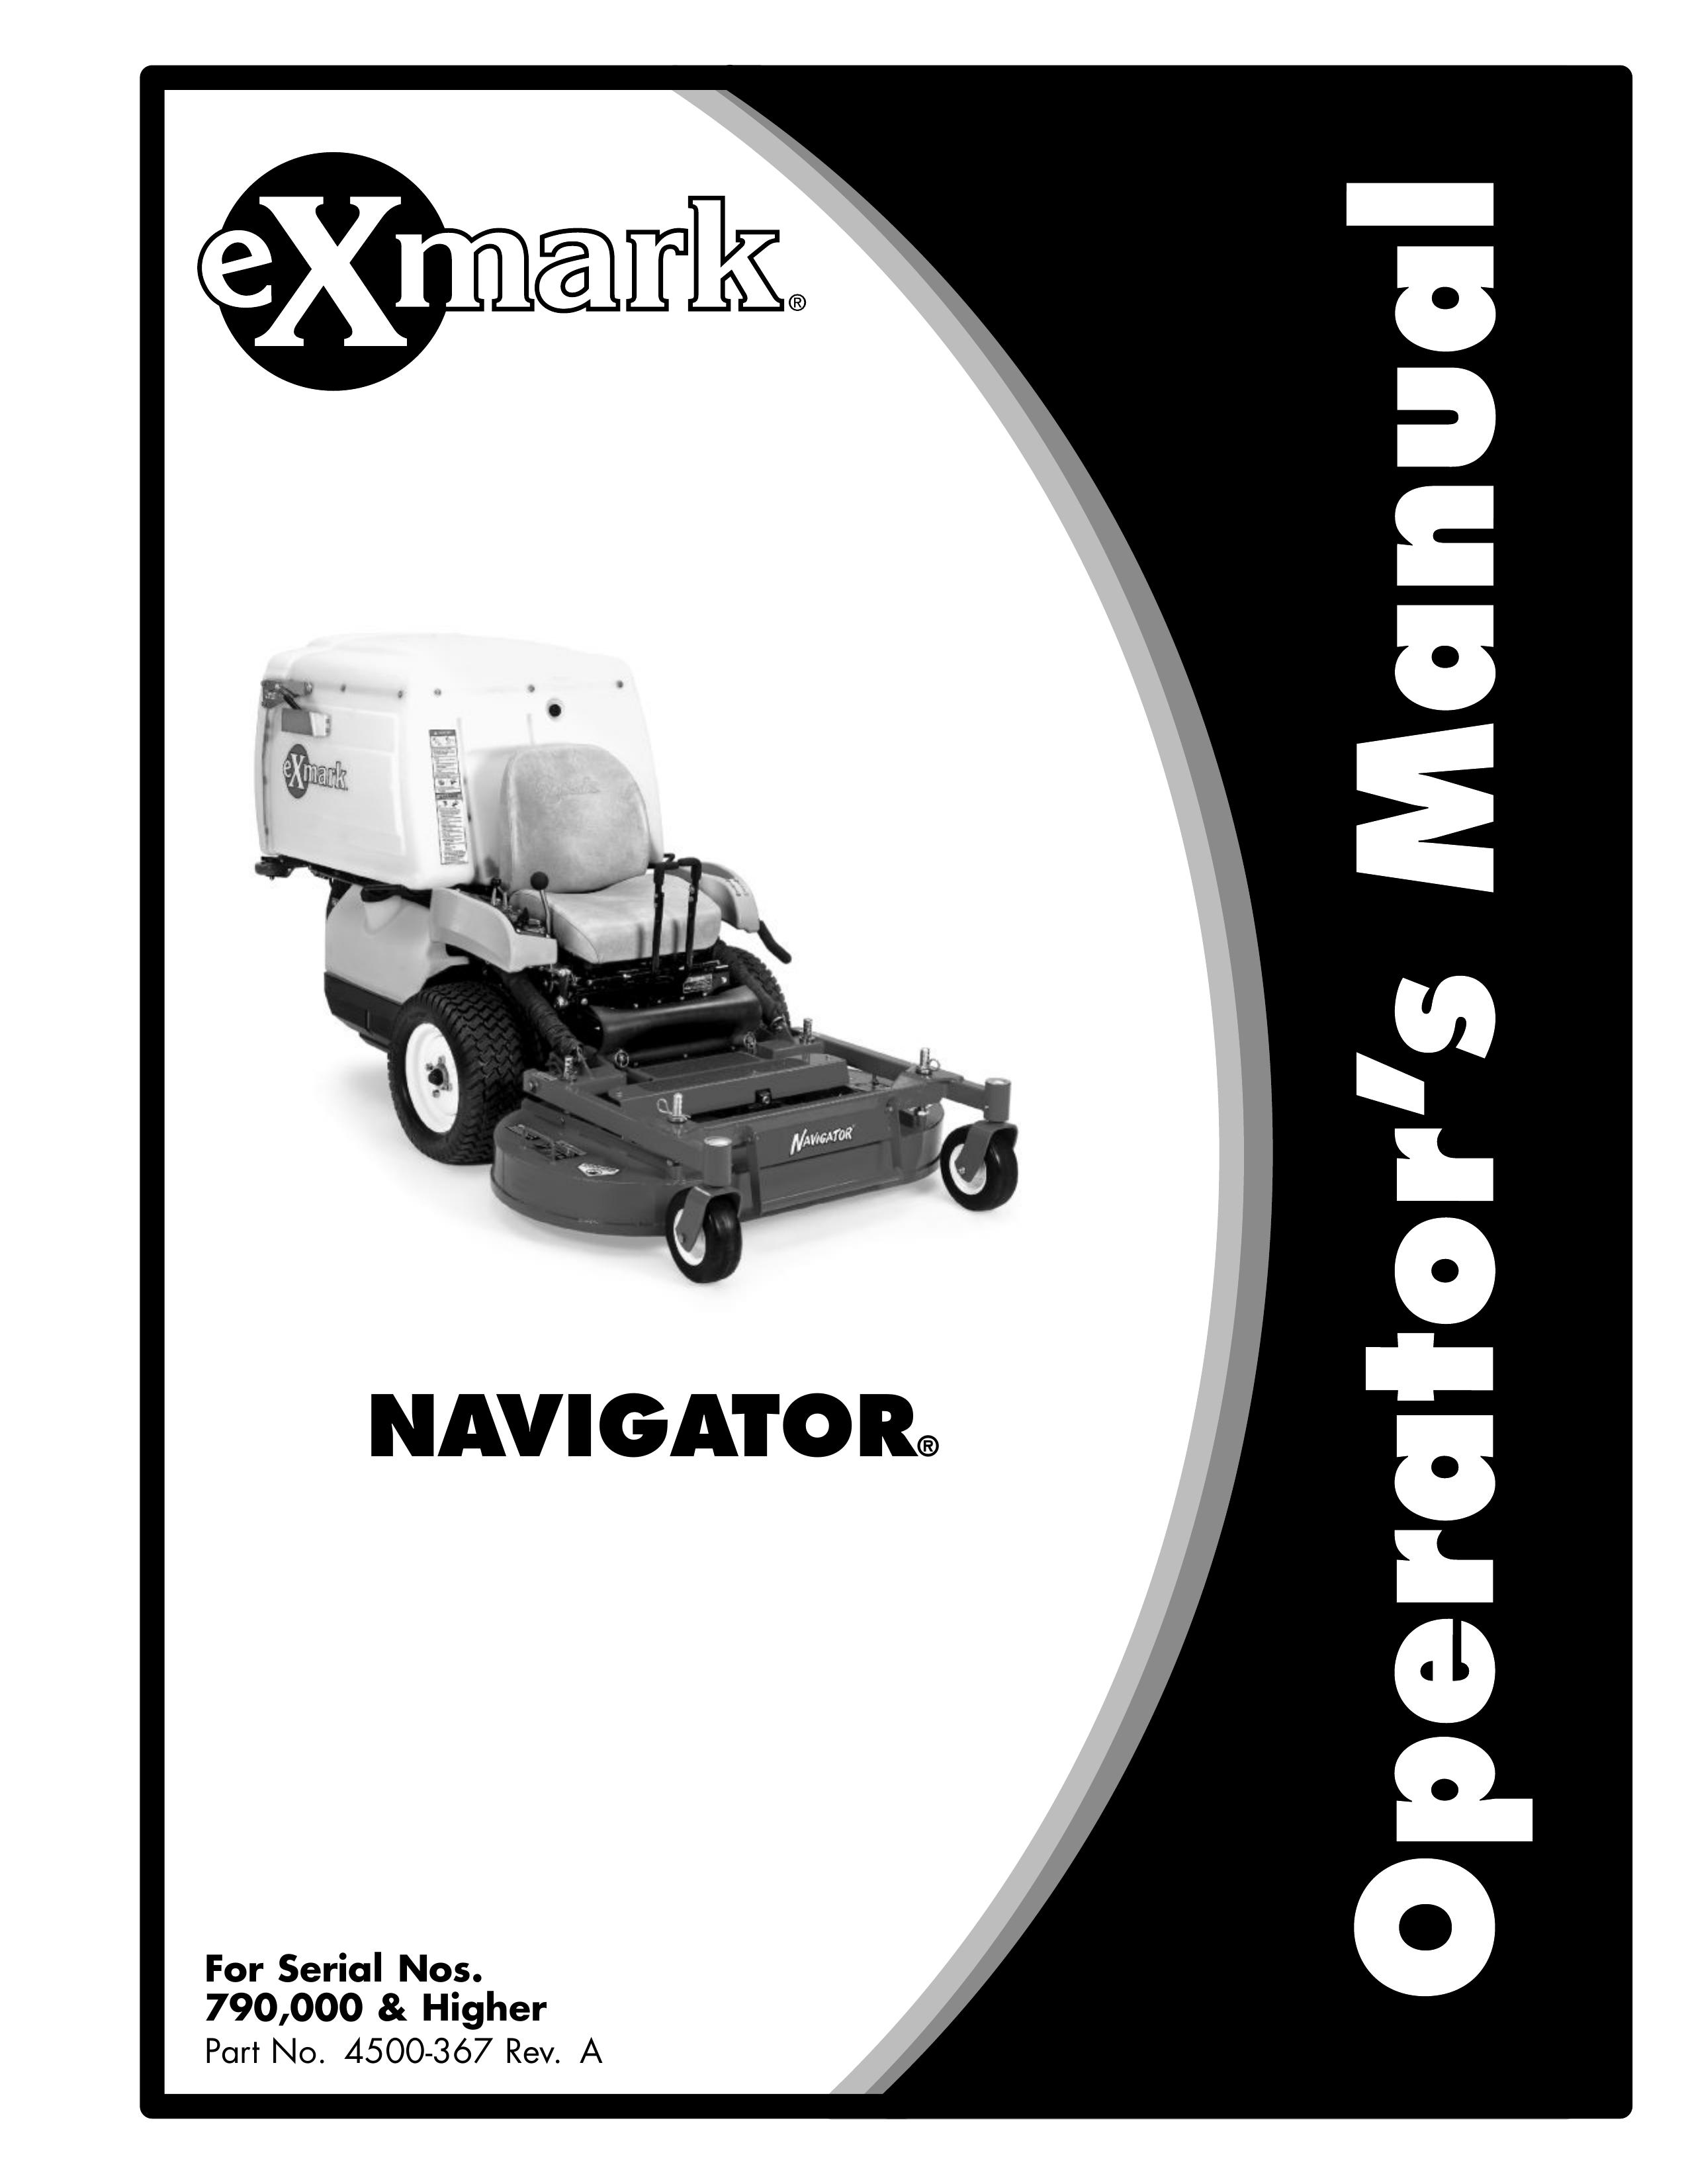 Exmark 4500-367 Lawn Mower User Manual